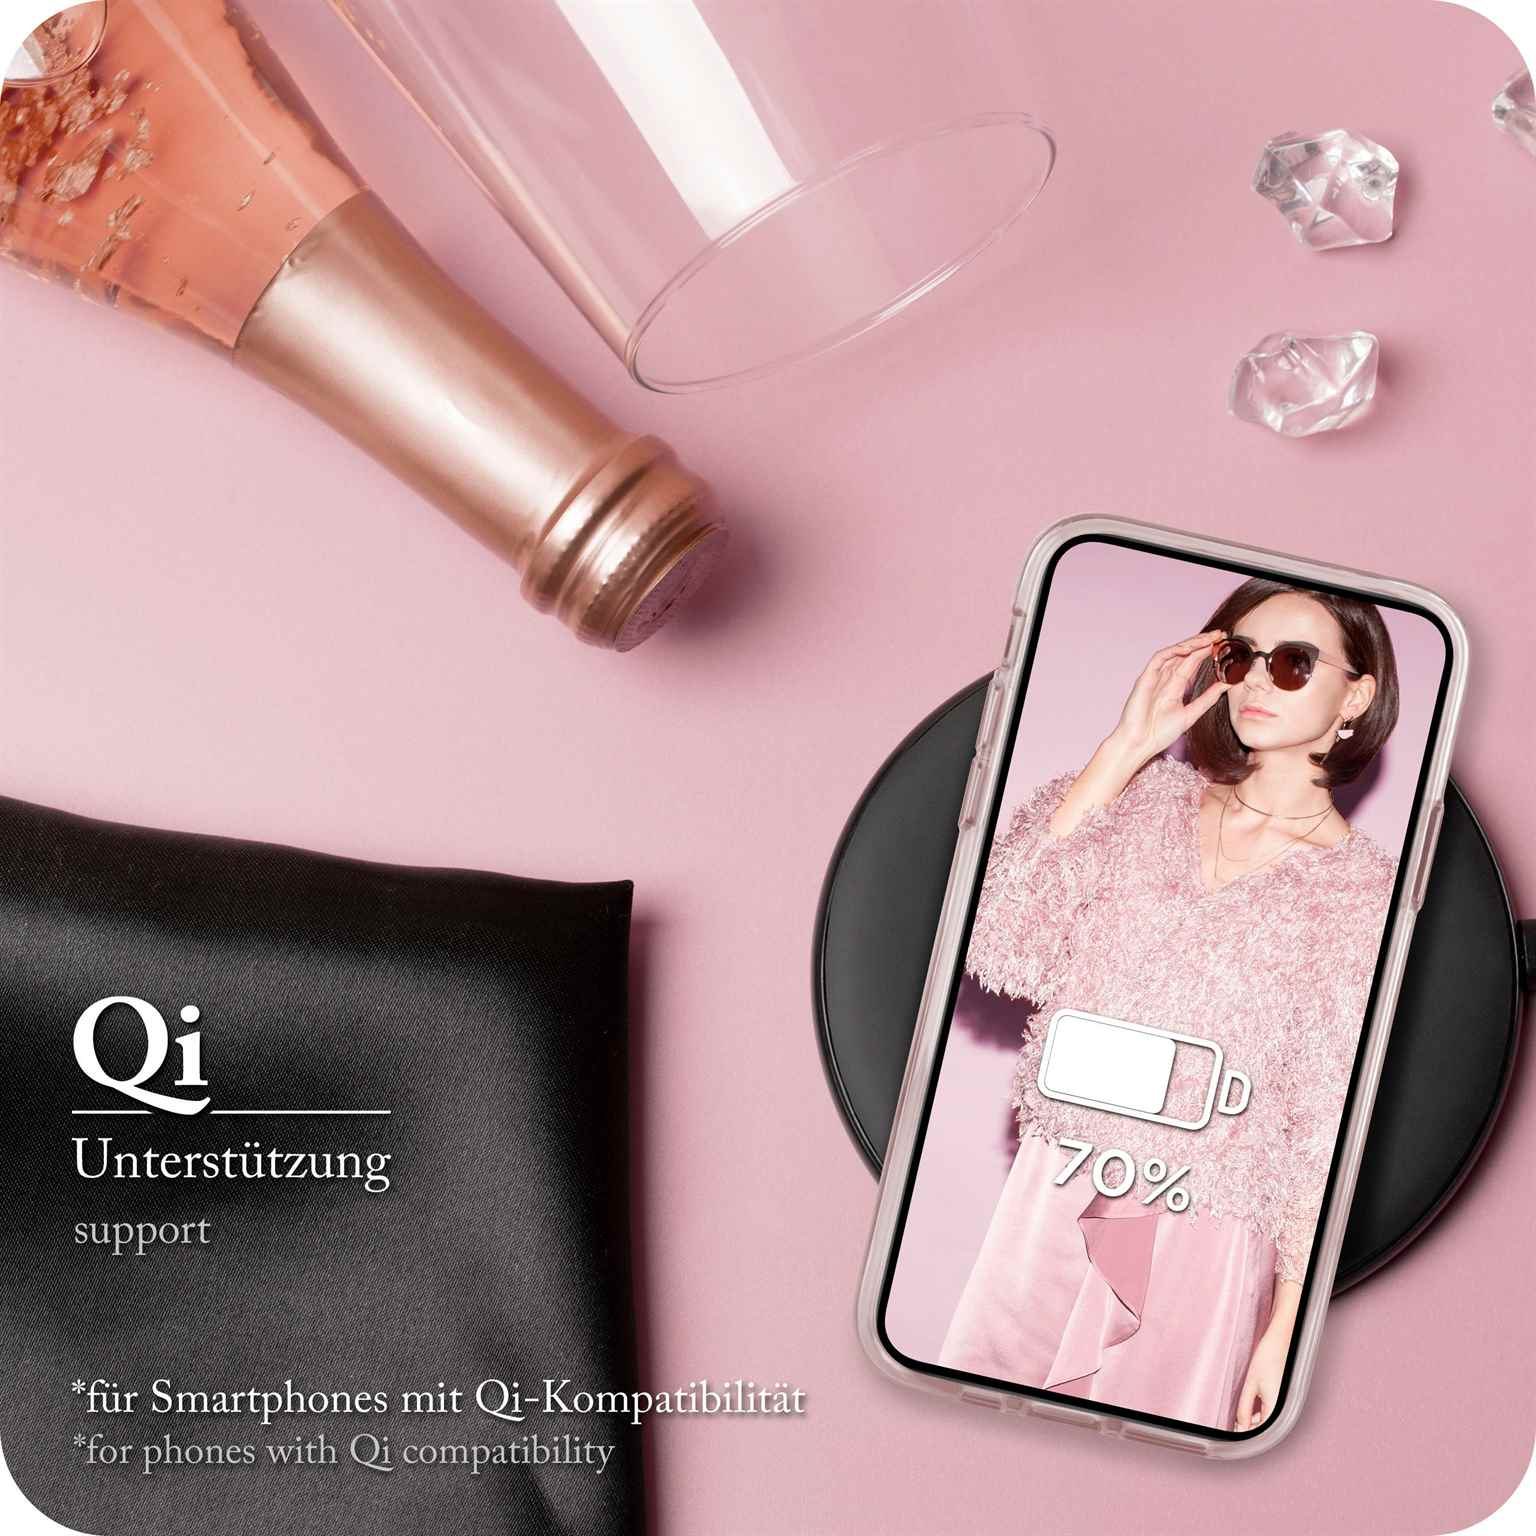 ONEFLOW Glitter Case, Apple, Gloss iPhone - Backcover, Rosé 12